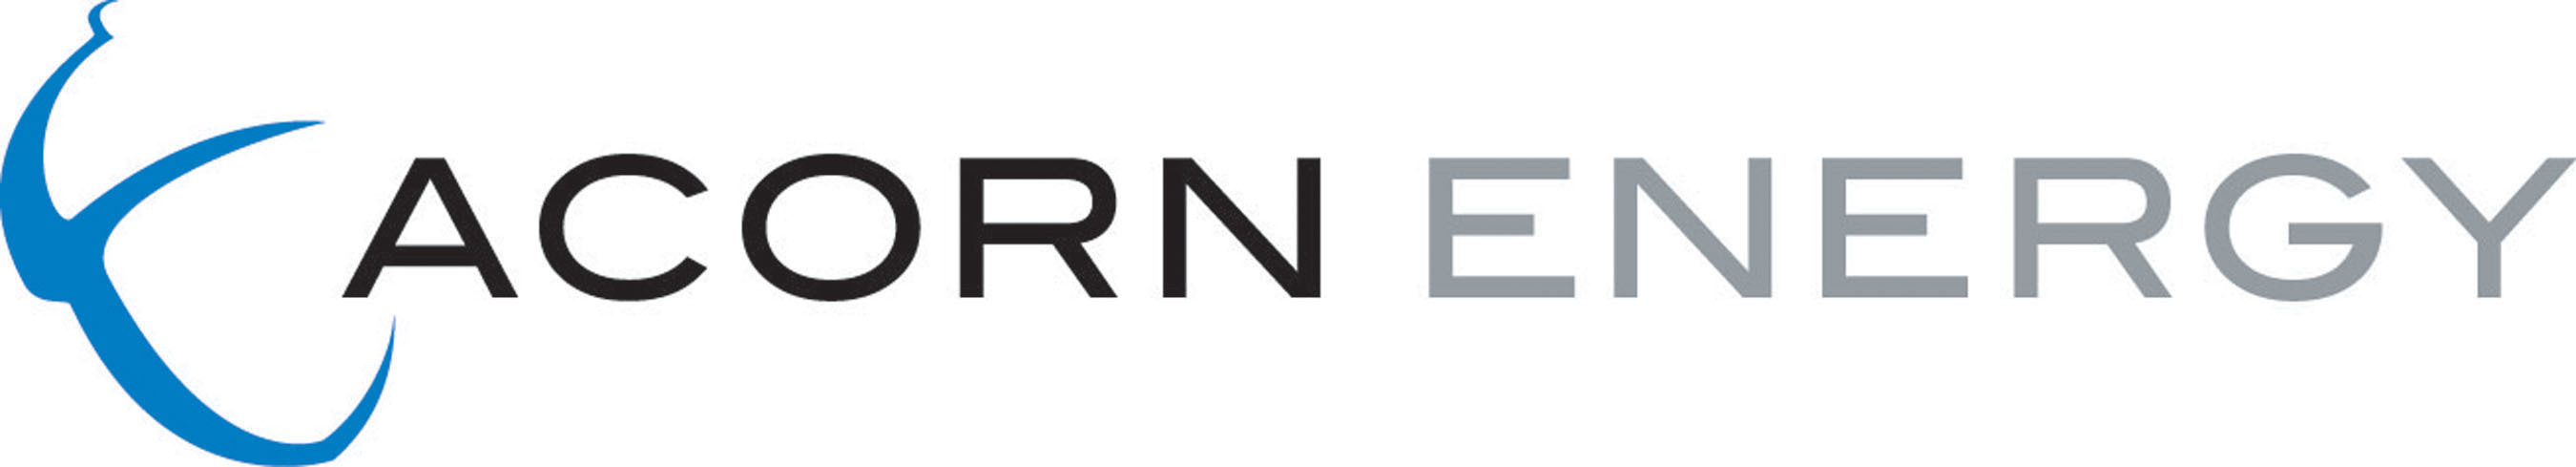 Acorn Energy Logo. (PRNewsFoto/Acorn Energy, Inc.) (PRNewsFoto/)